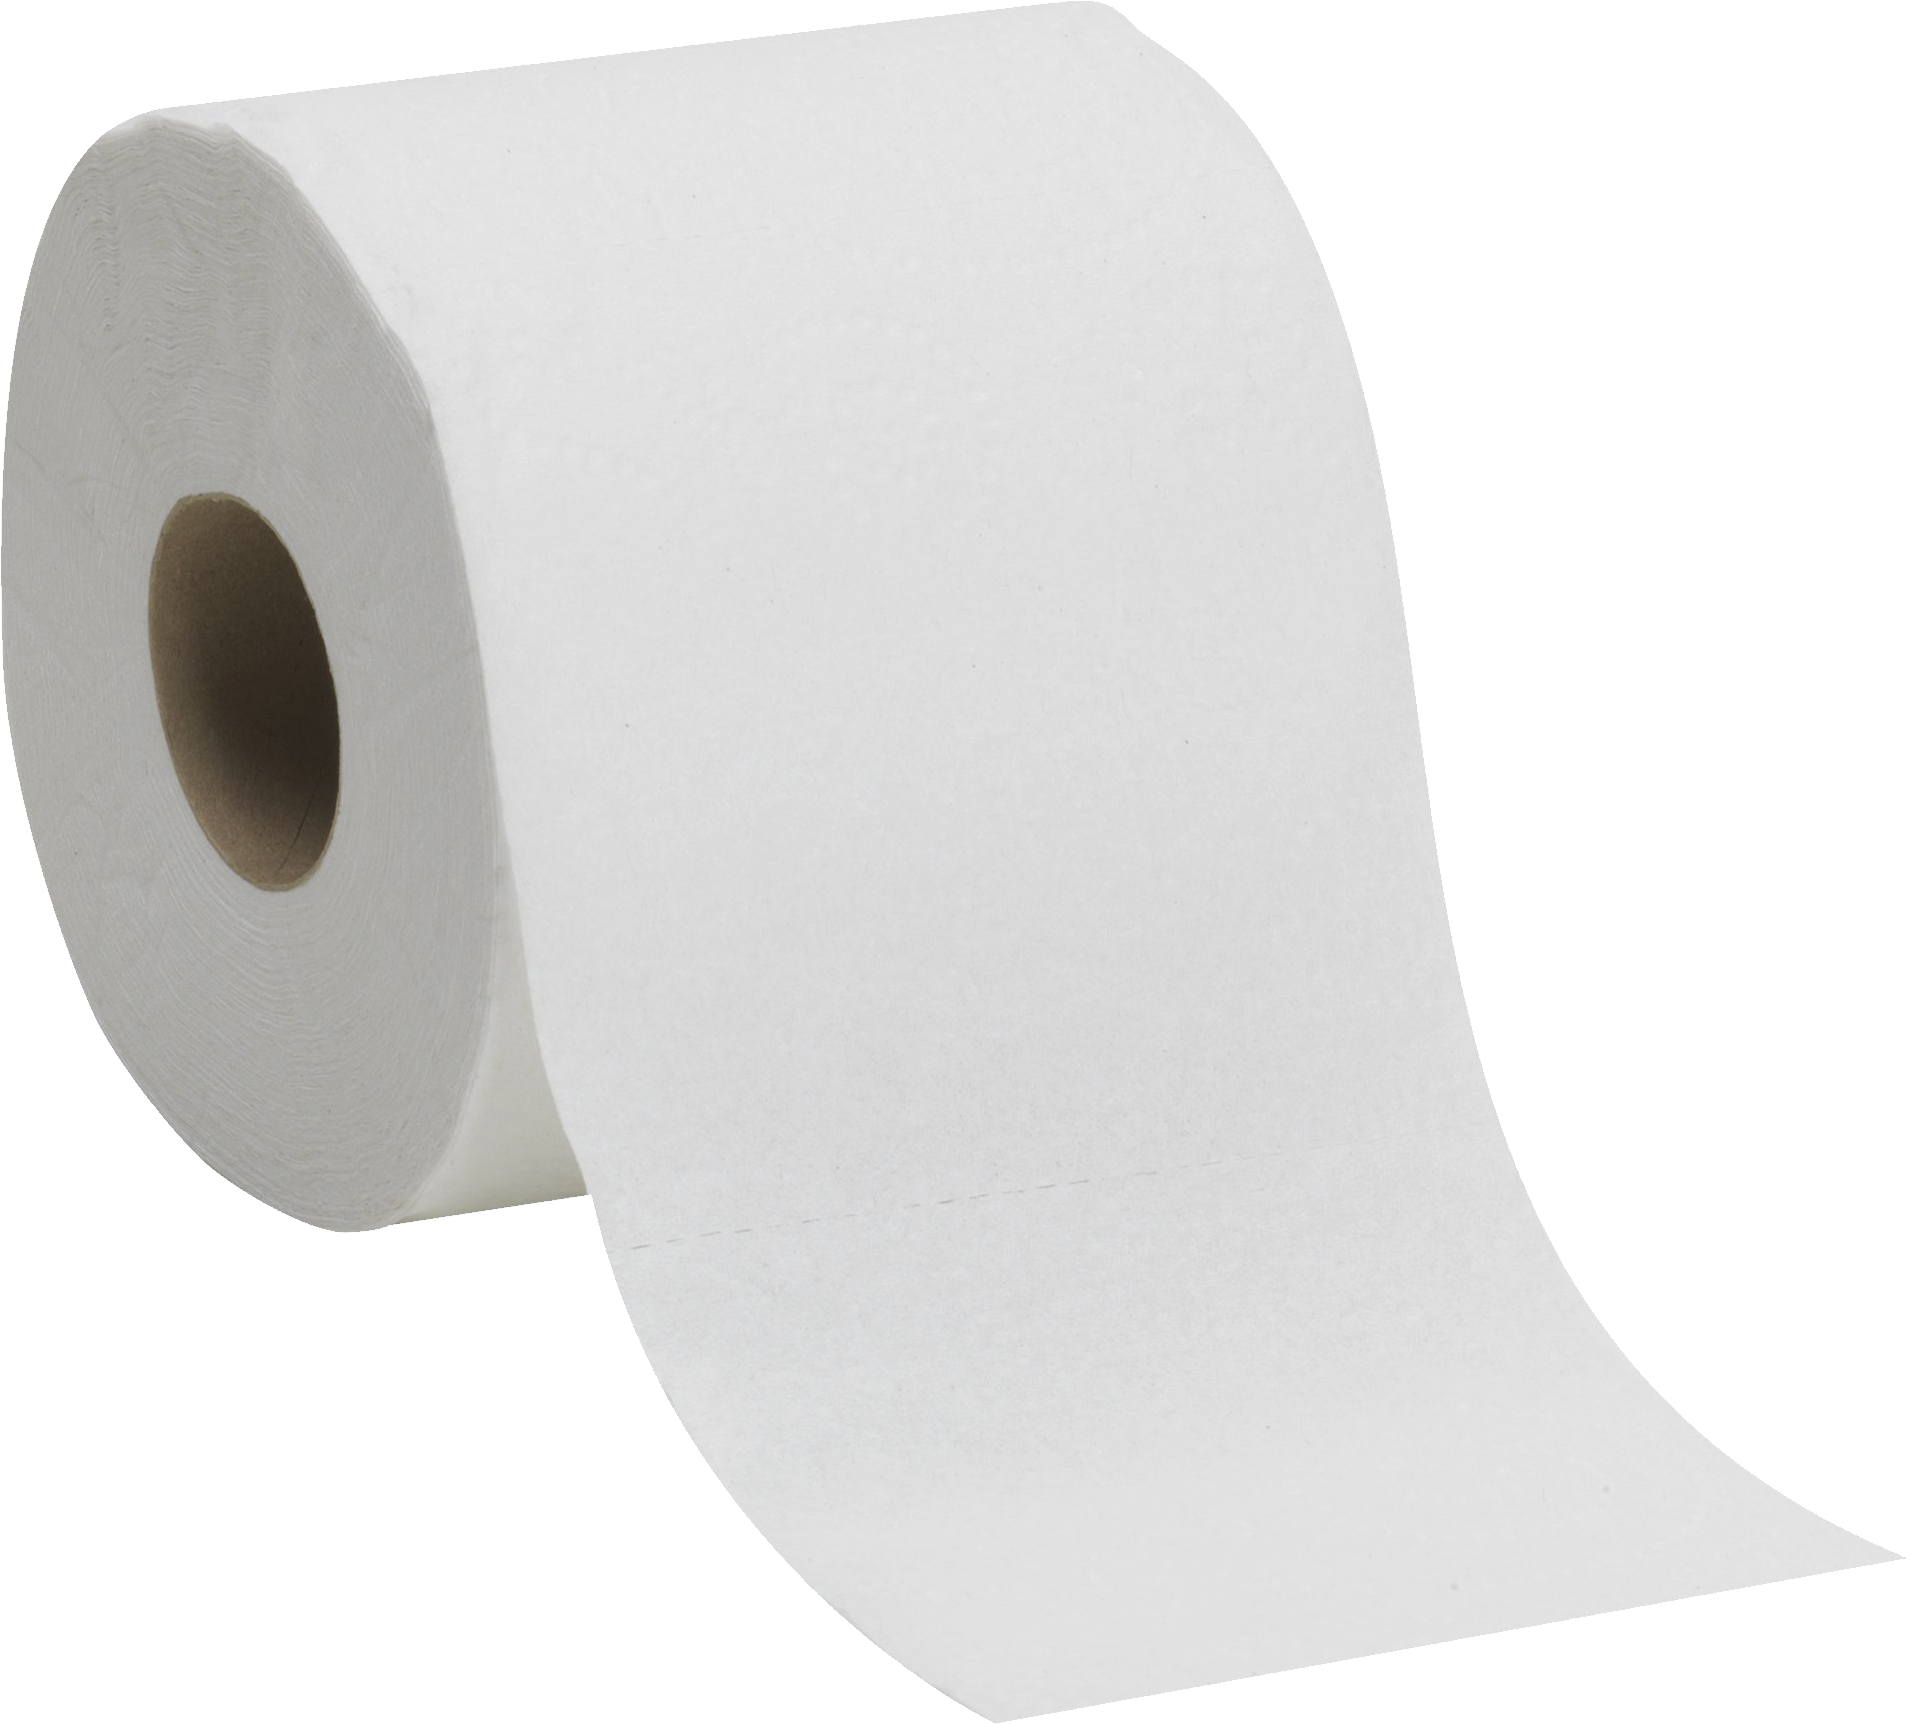 Toilet Paper PNG HD-PlusPNG p